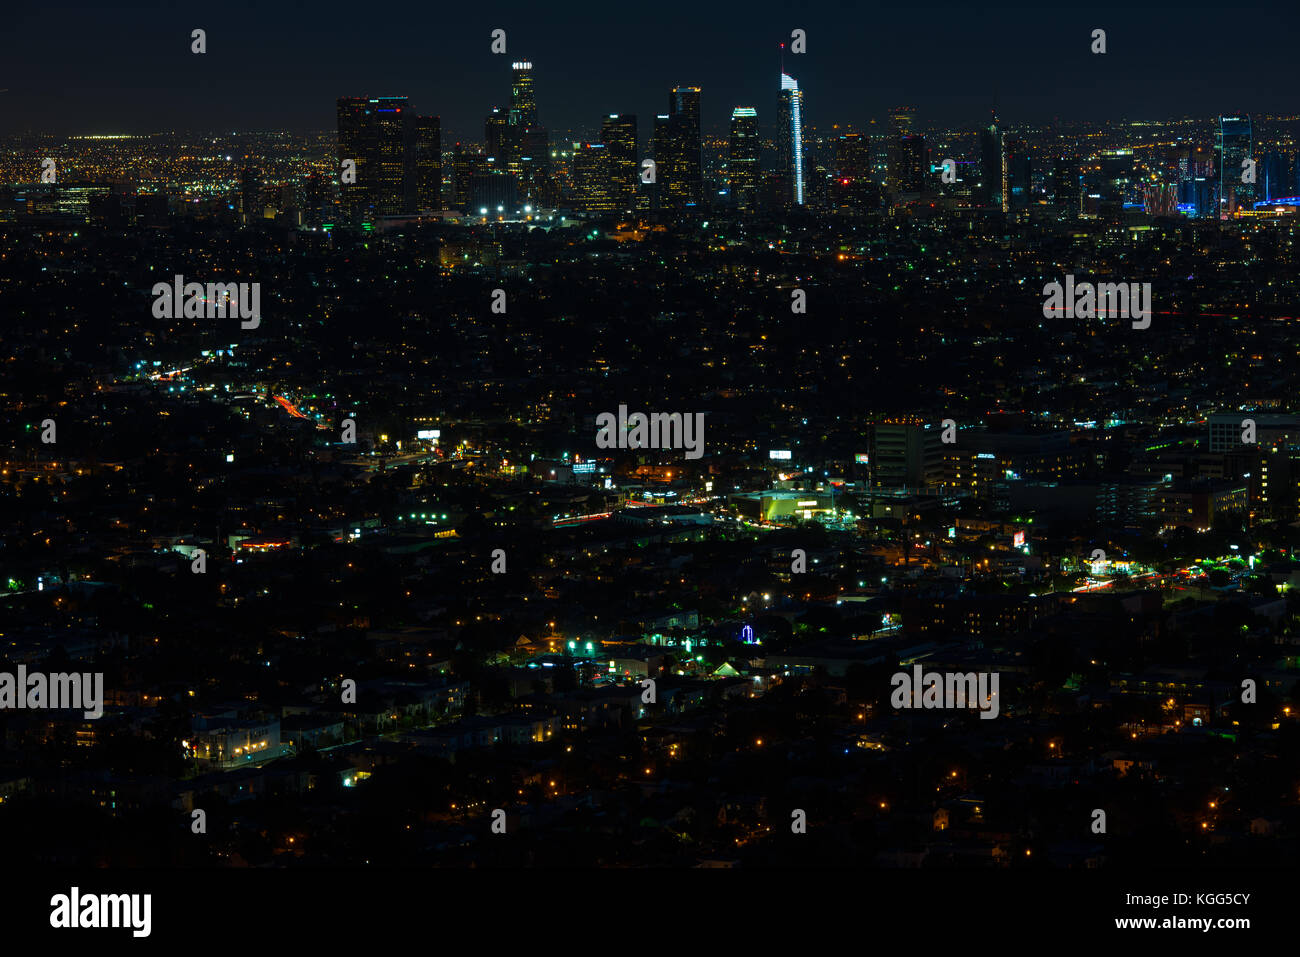 Los Angeles city at night Stock Photo